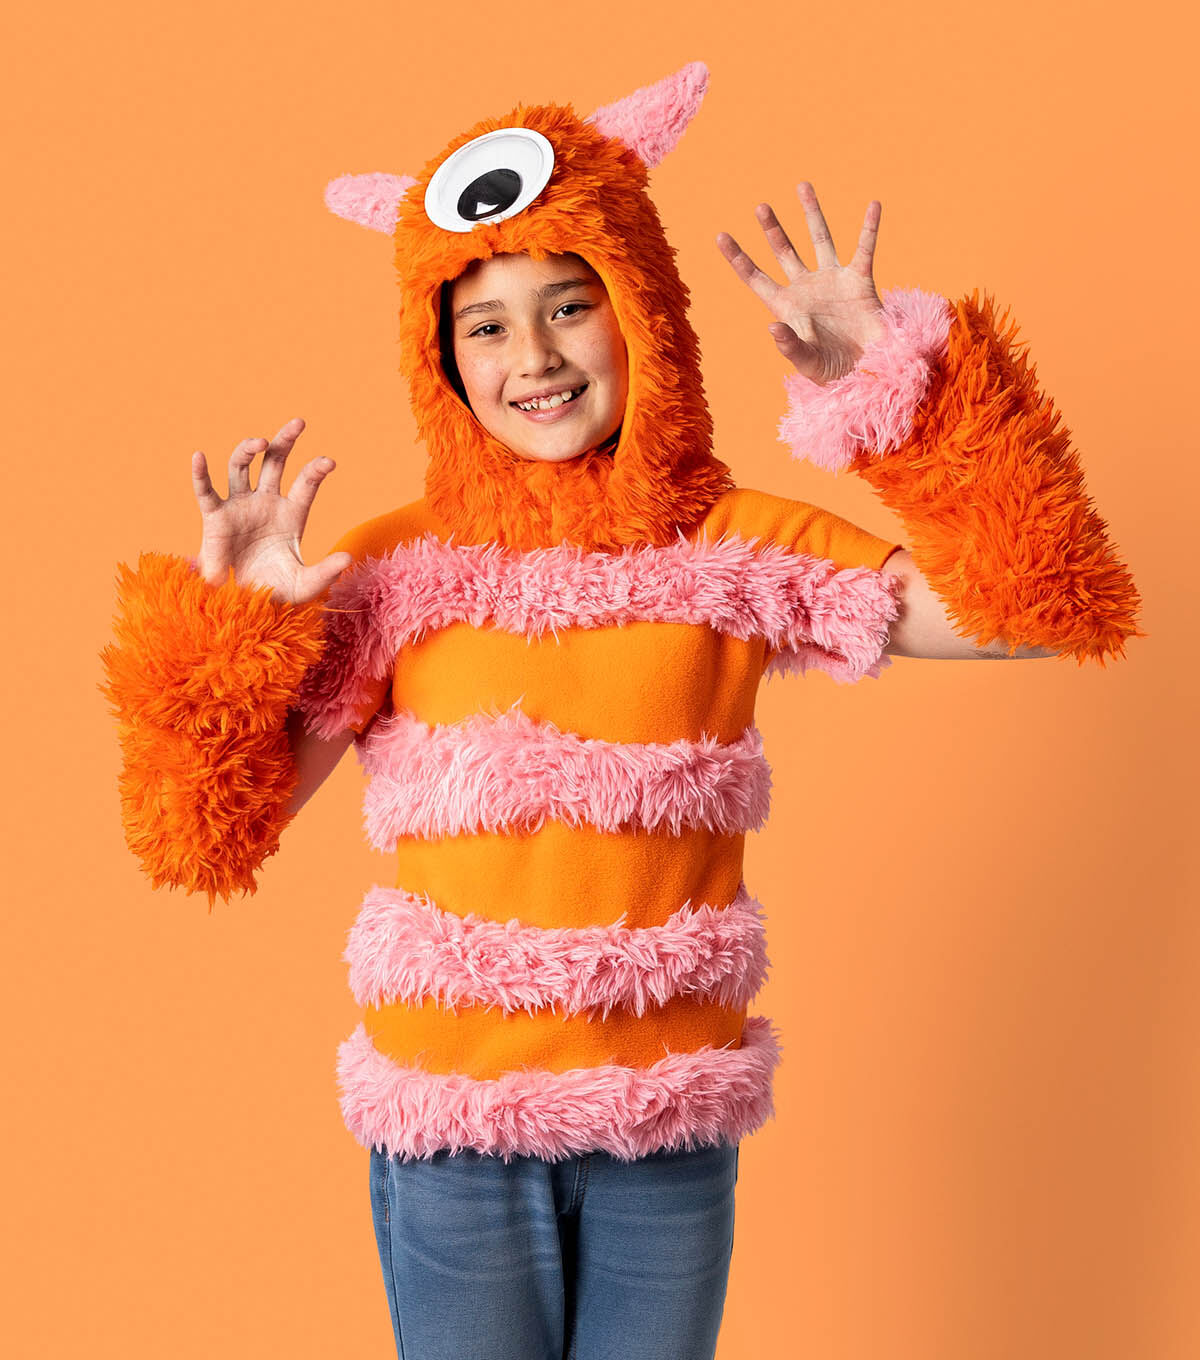 How To Make Low Sew Easy Monster Costume Online | JOANN